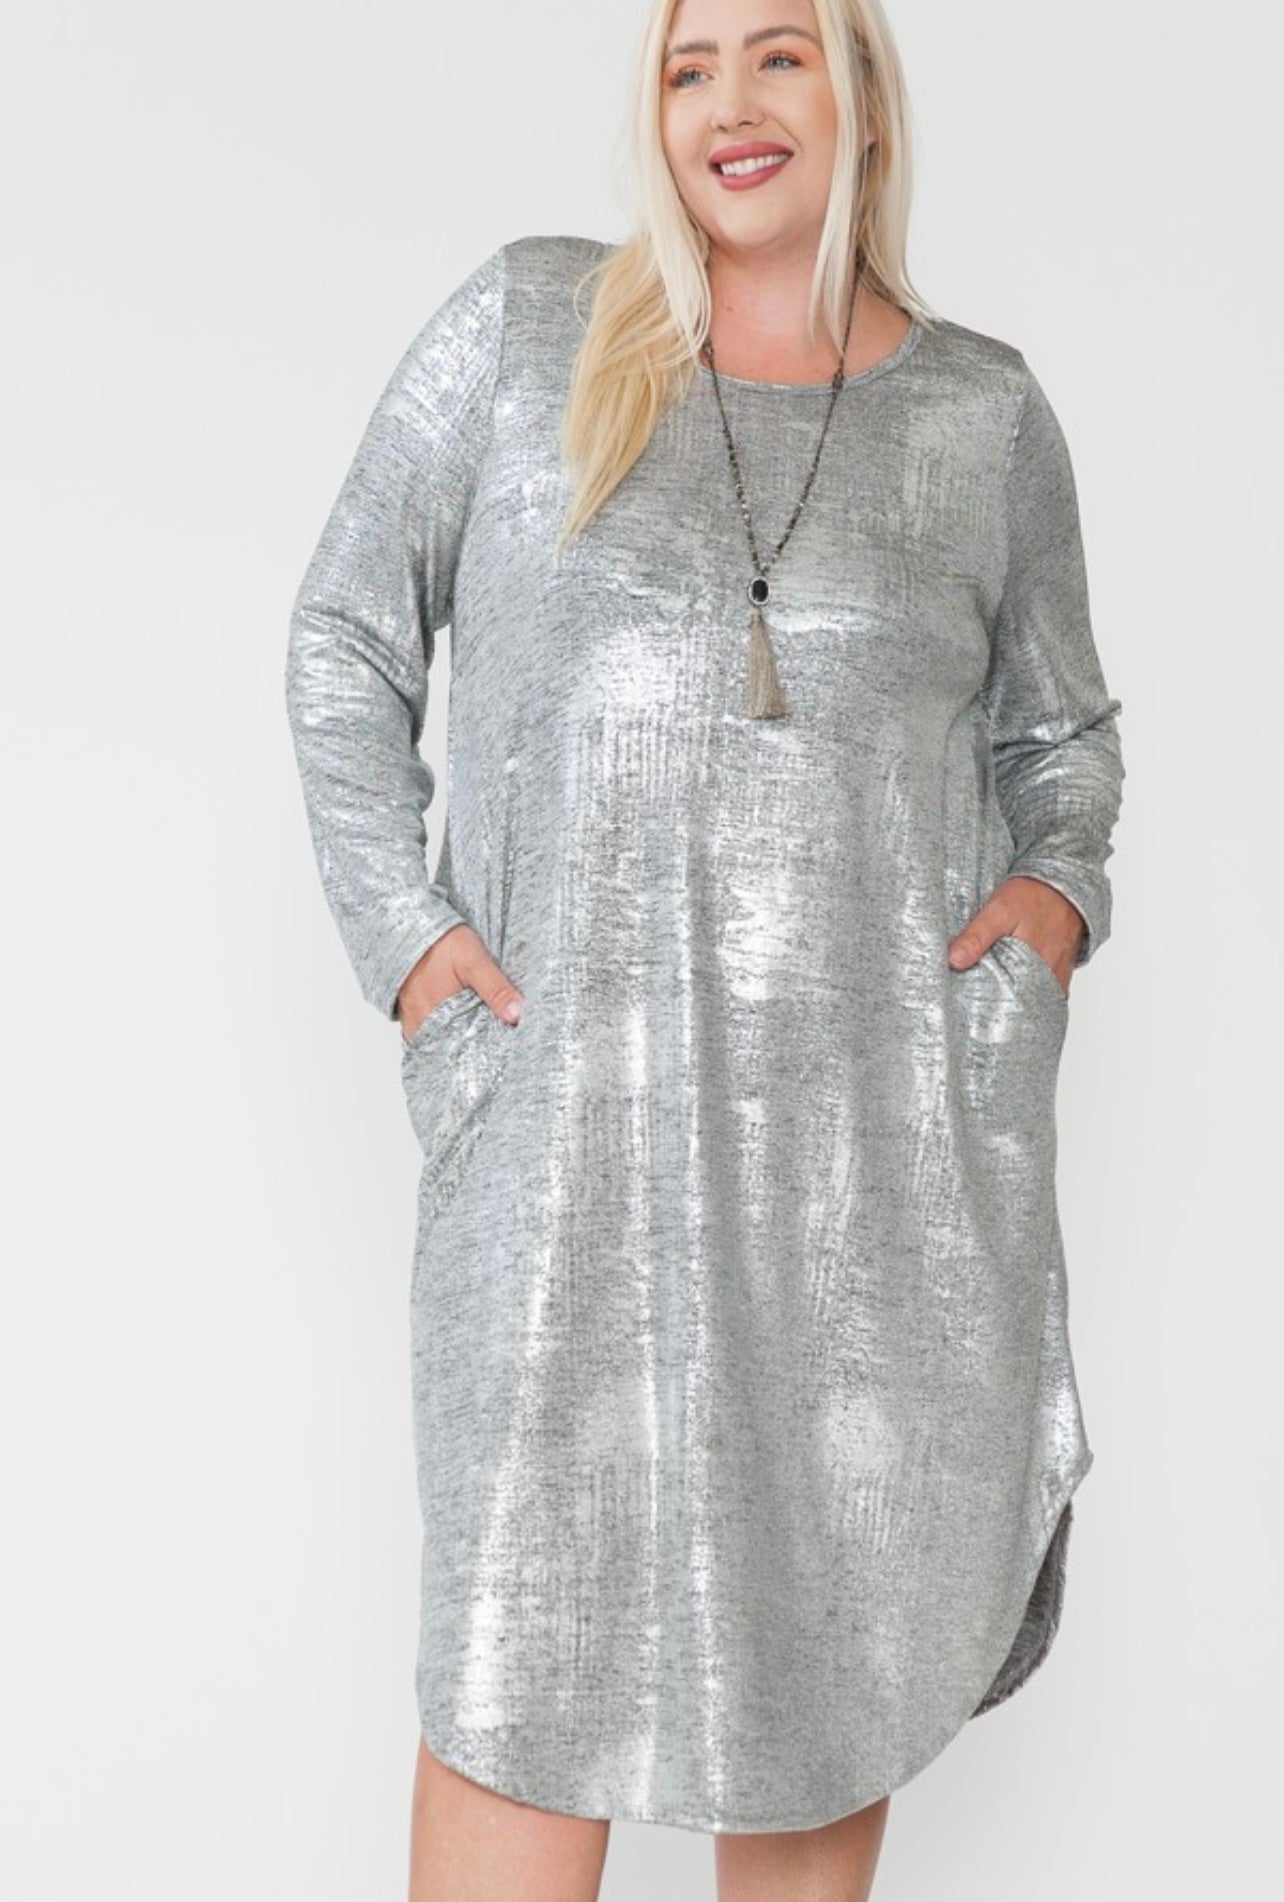 Silver Foil Dress